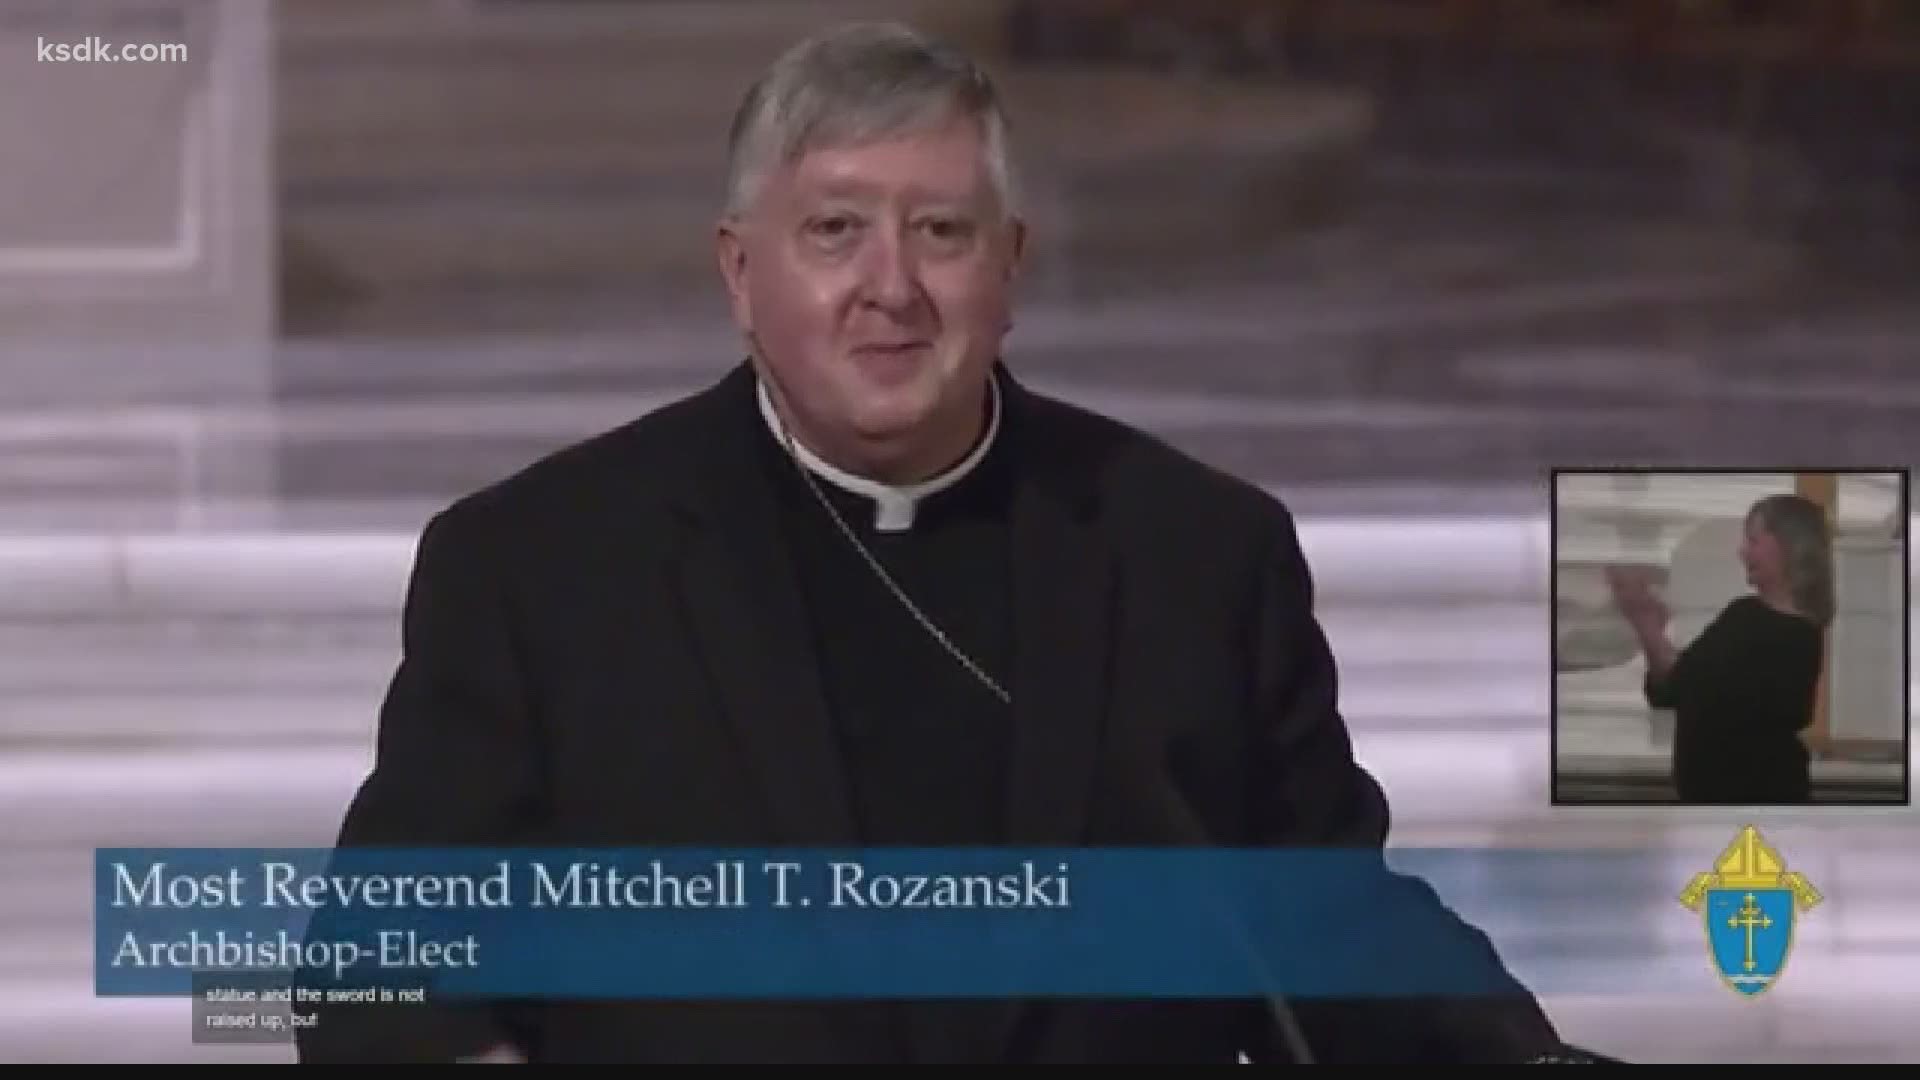 Archbishop-elect Rozanski currently serves as Bishop of Springfield, Massachusetts